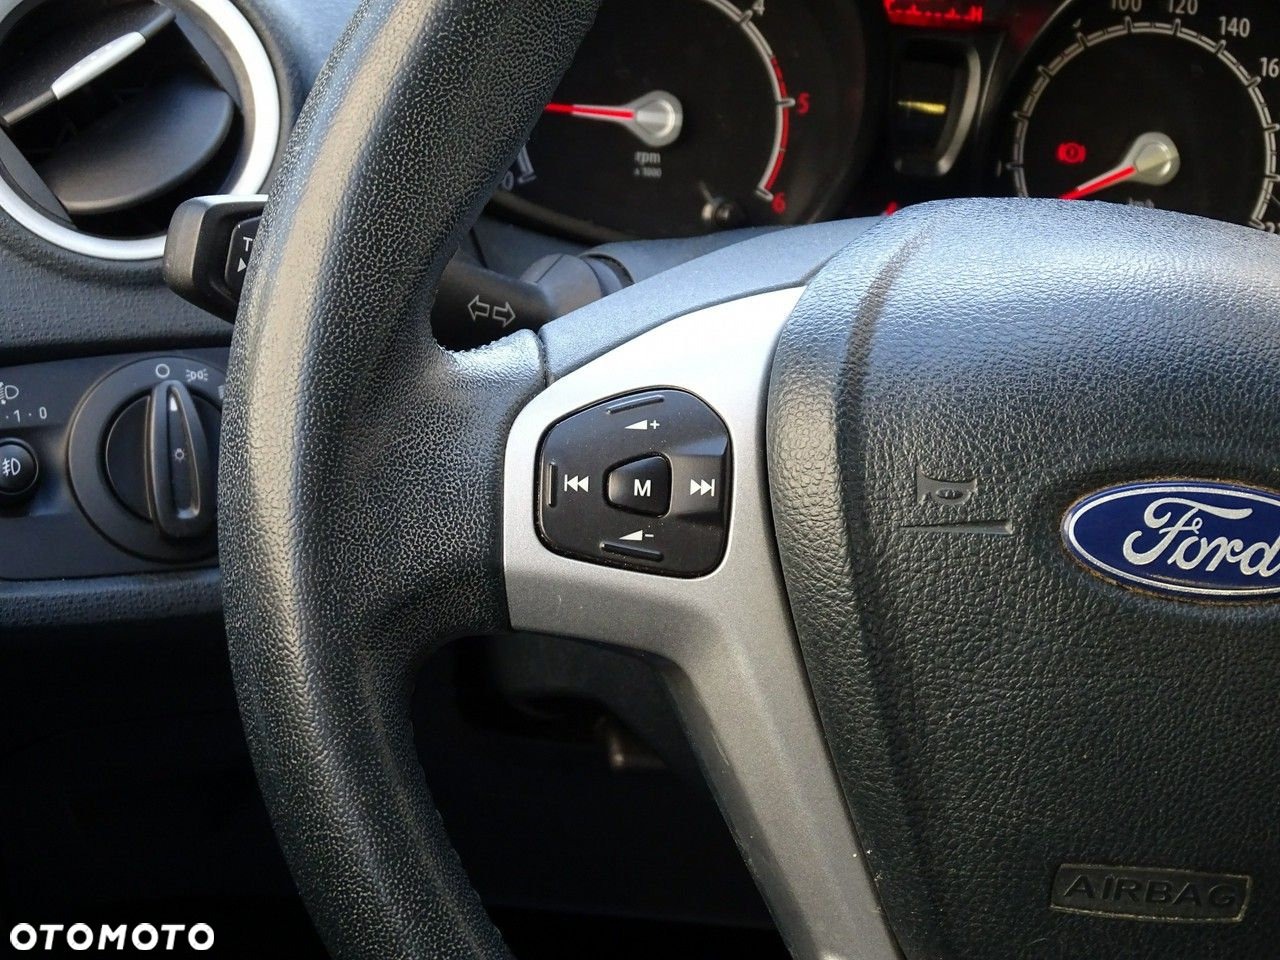 Ford Fiesta - 17